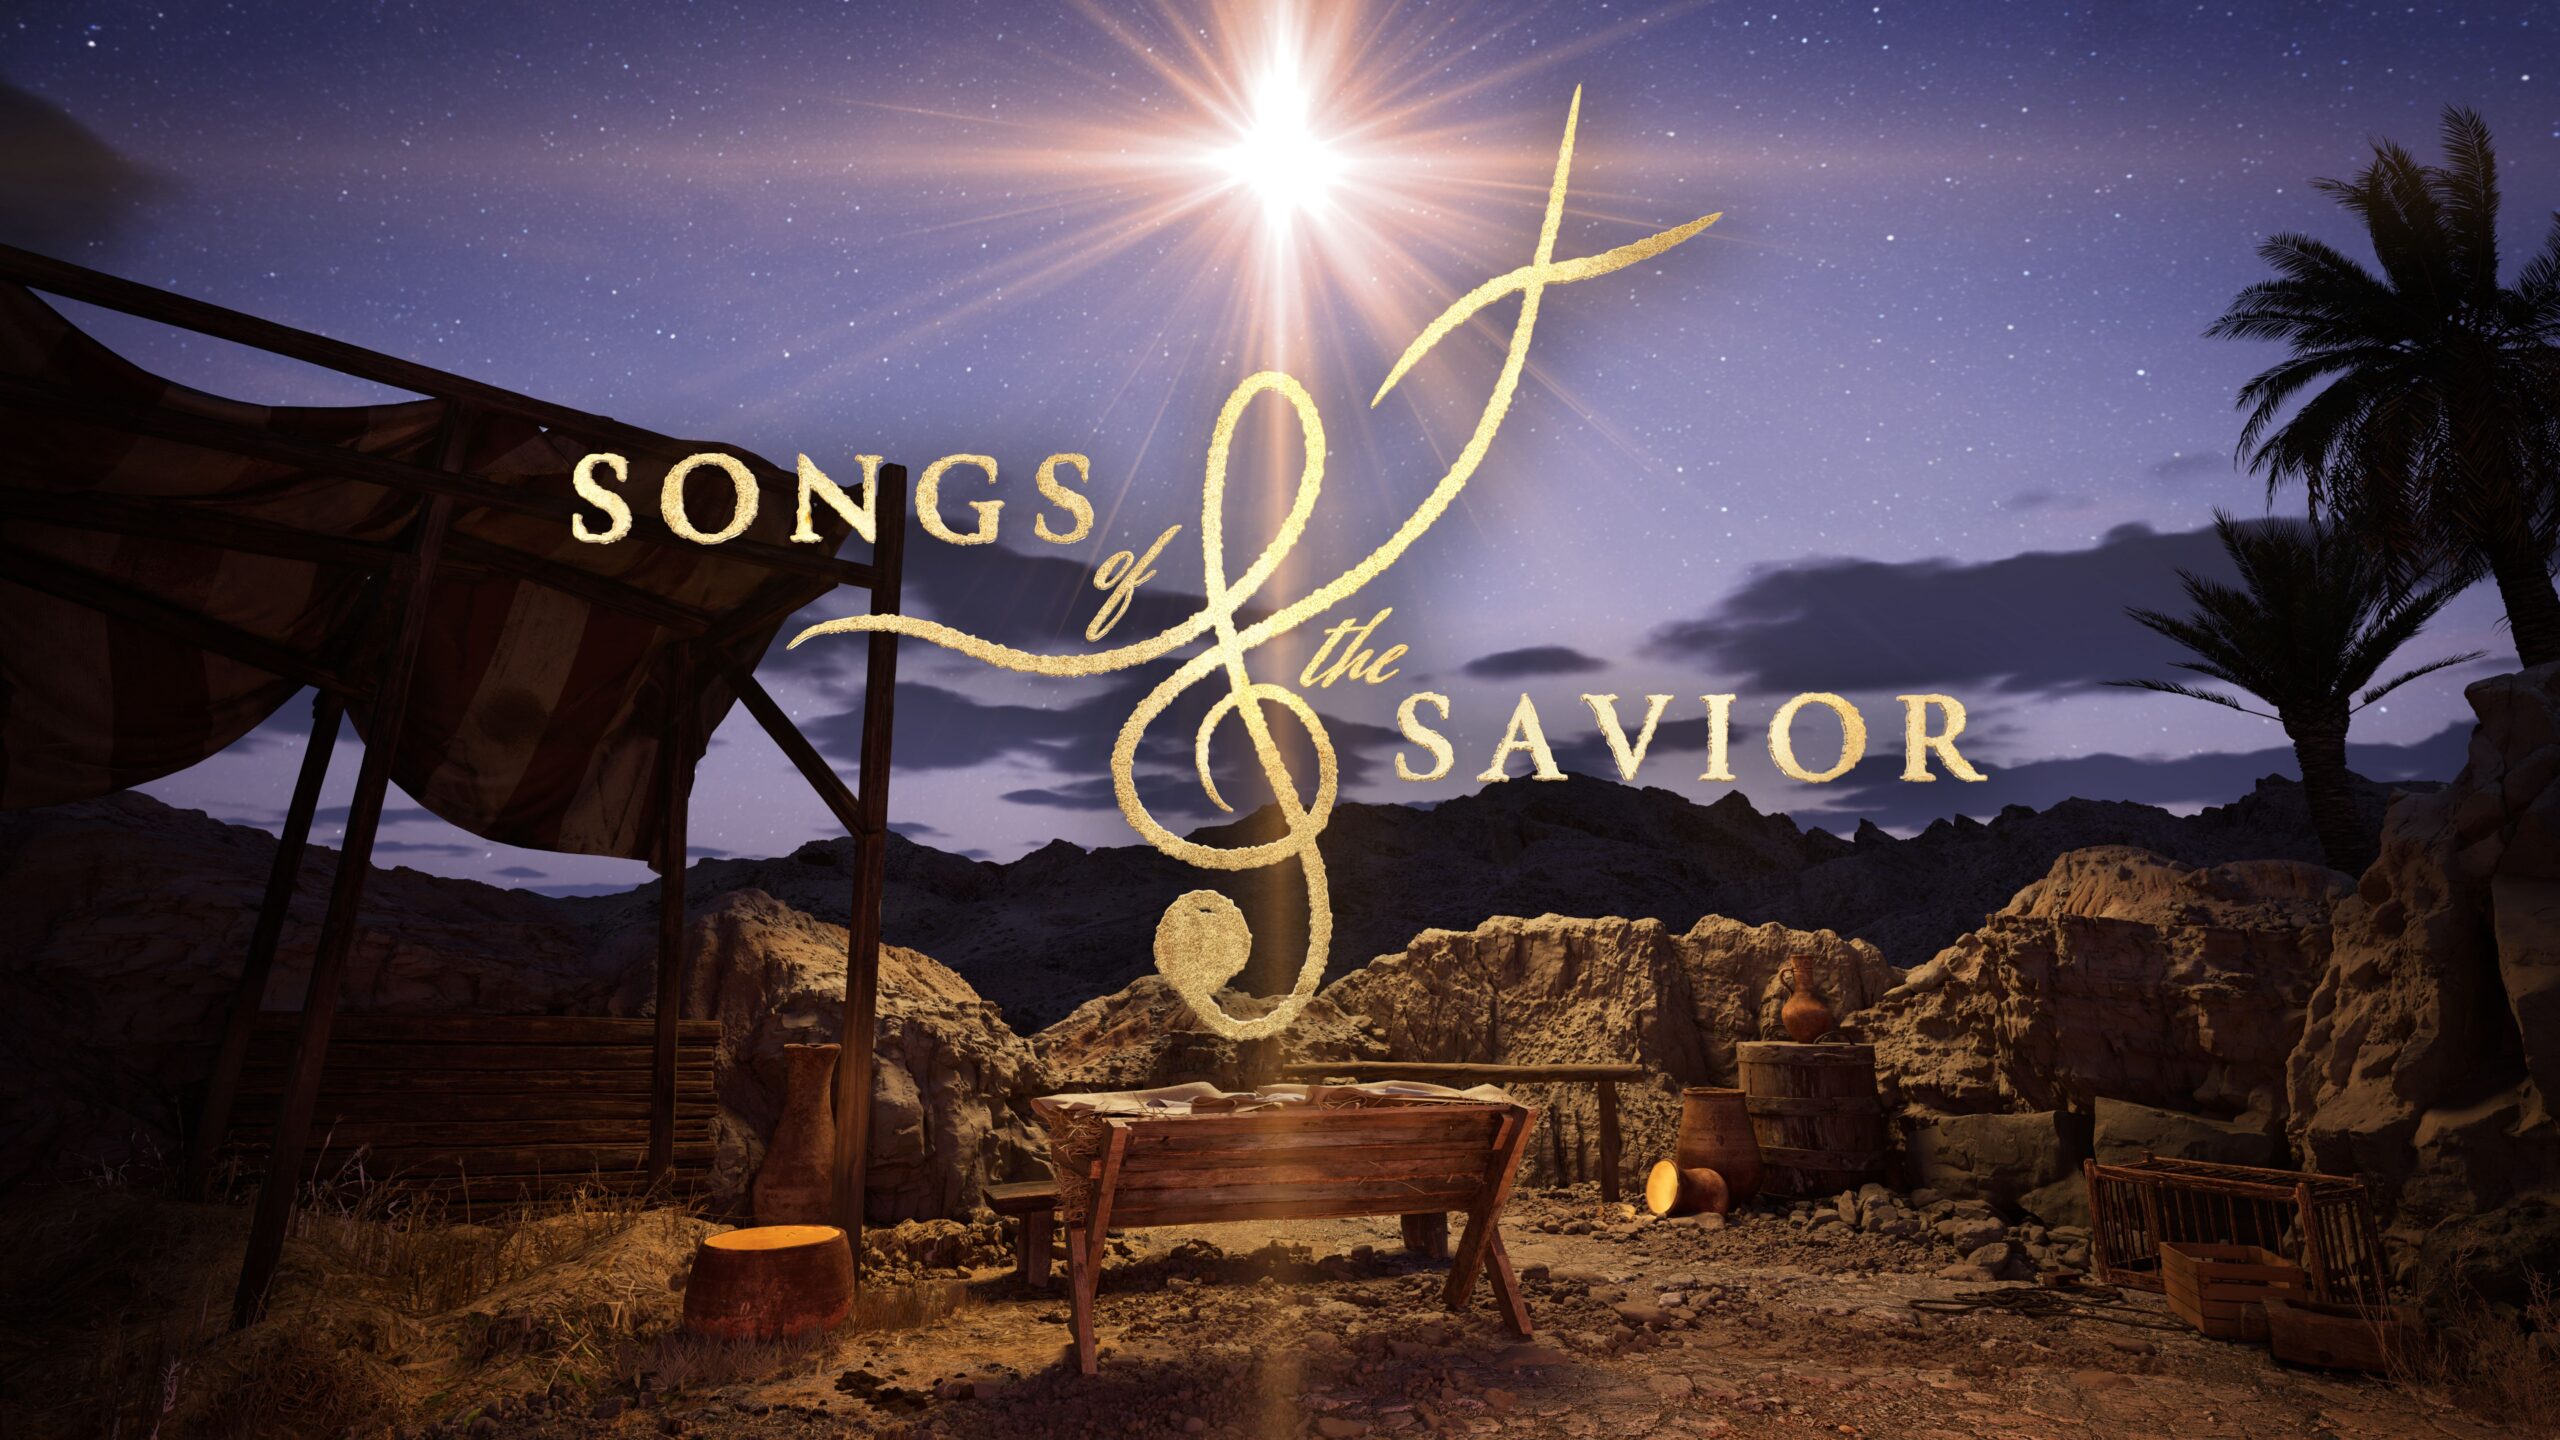 Songs of the Savior: “O Come All Ye Faithful”